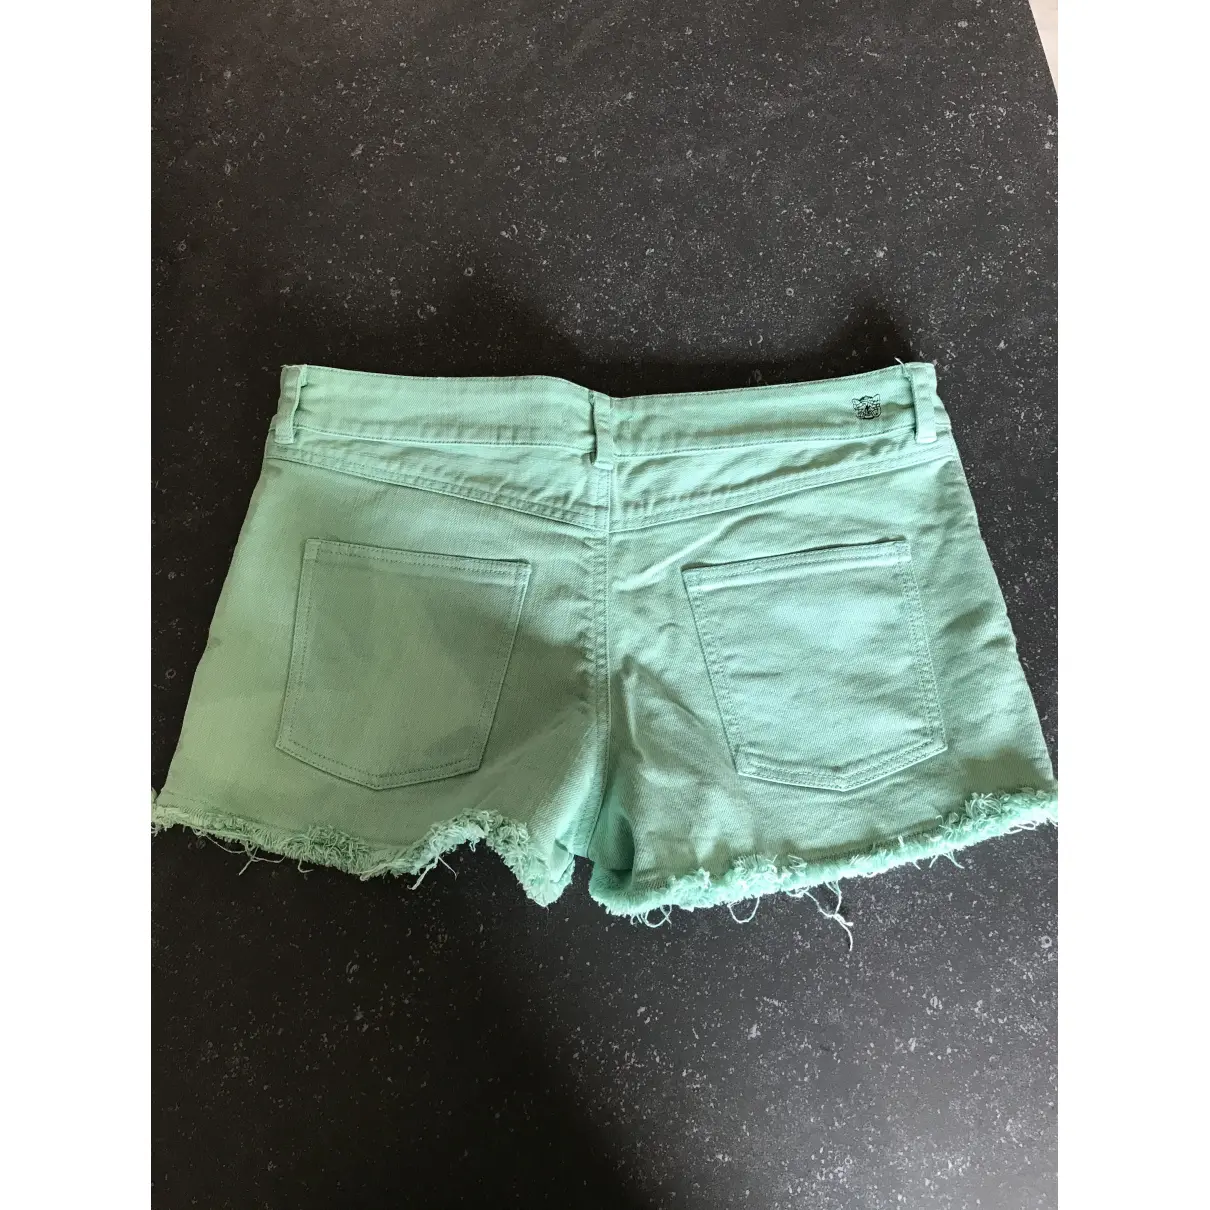 Buy Masscob Green Cotton - elasthane Shorts online